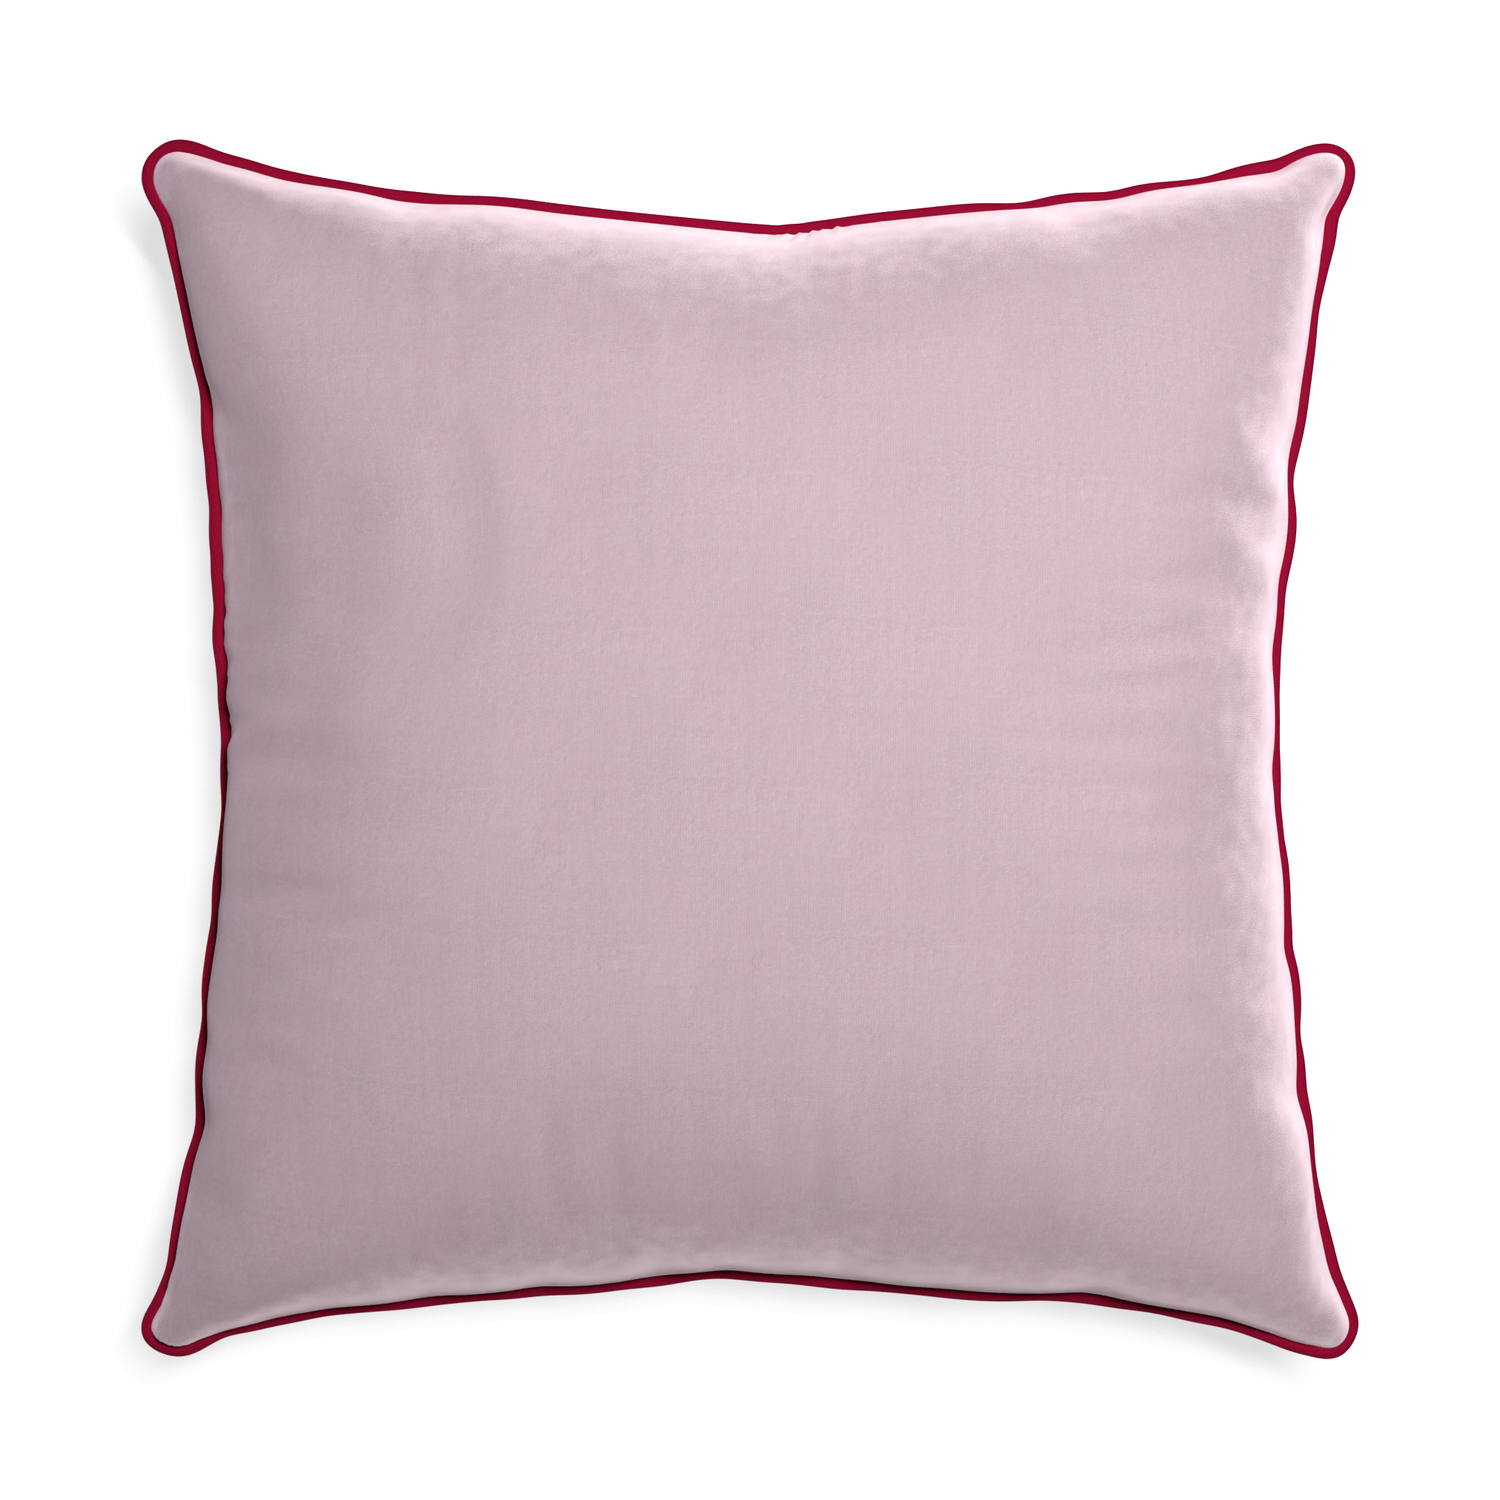 Euro-sham lilac velvet custom pillow with raspberry piping on white background